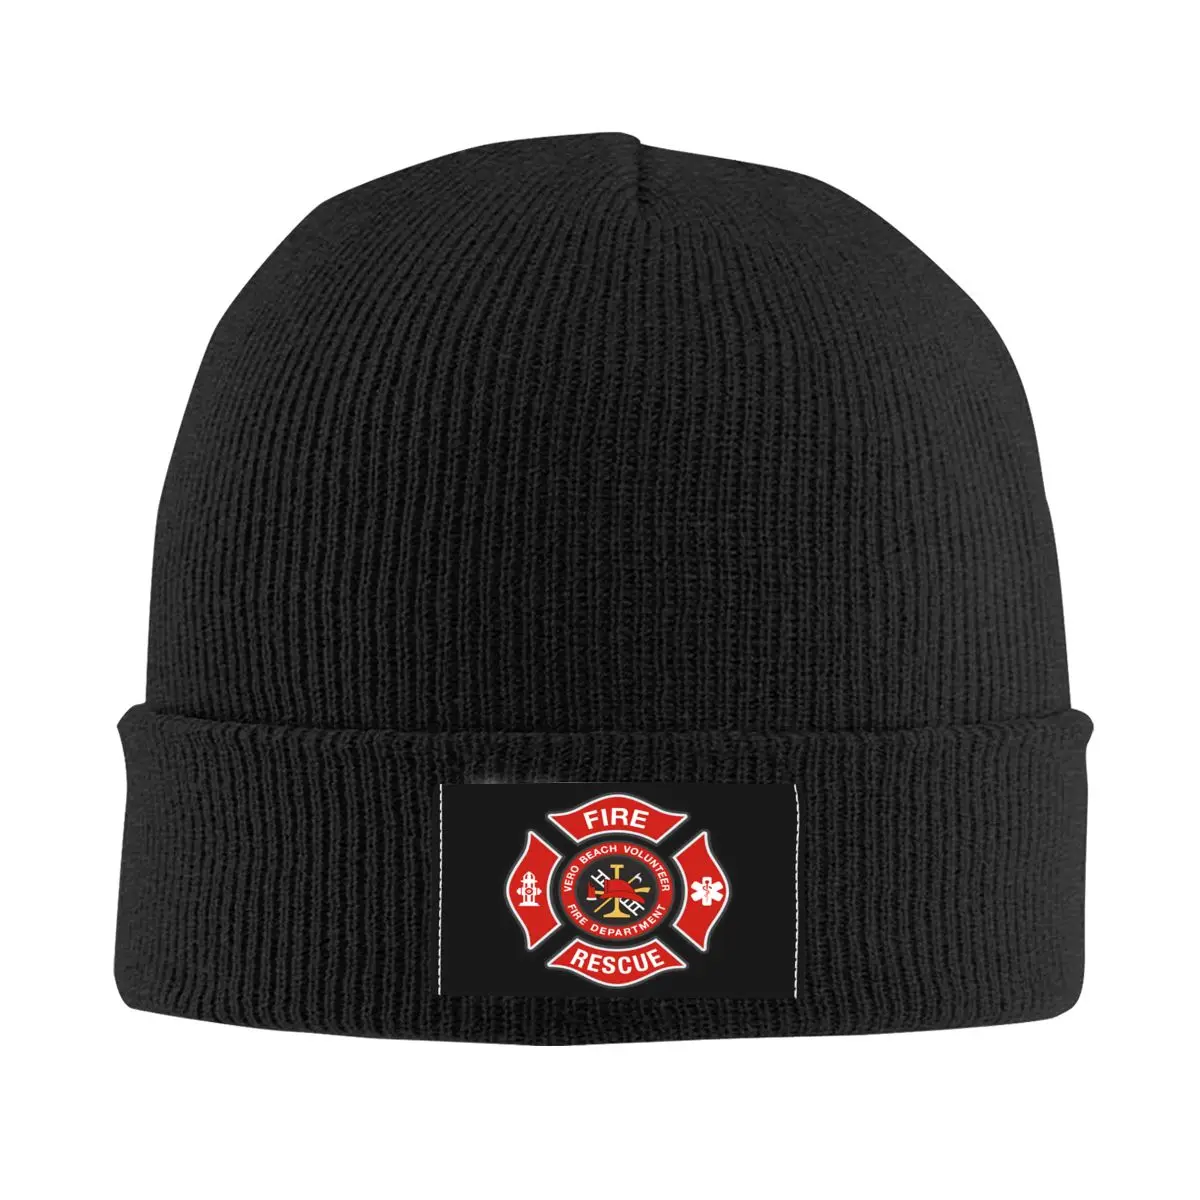 Fire Rescue Firefighter Beanie Cap Unisex Winter Warm Bonnet Knit Hat Street Outdoor Ski Skullies Beanies Hats For Men Women 1